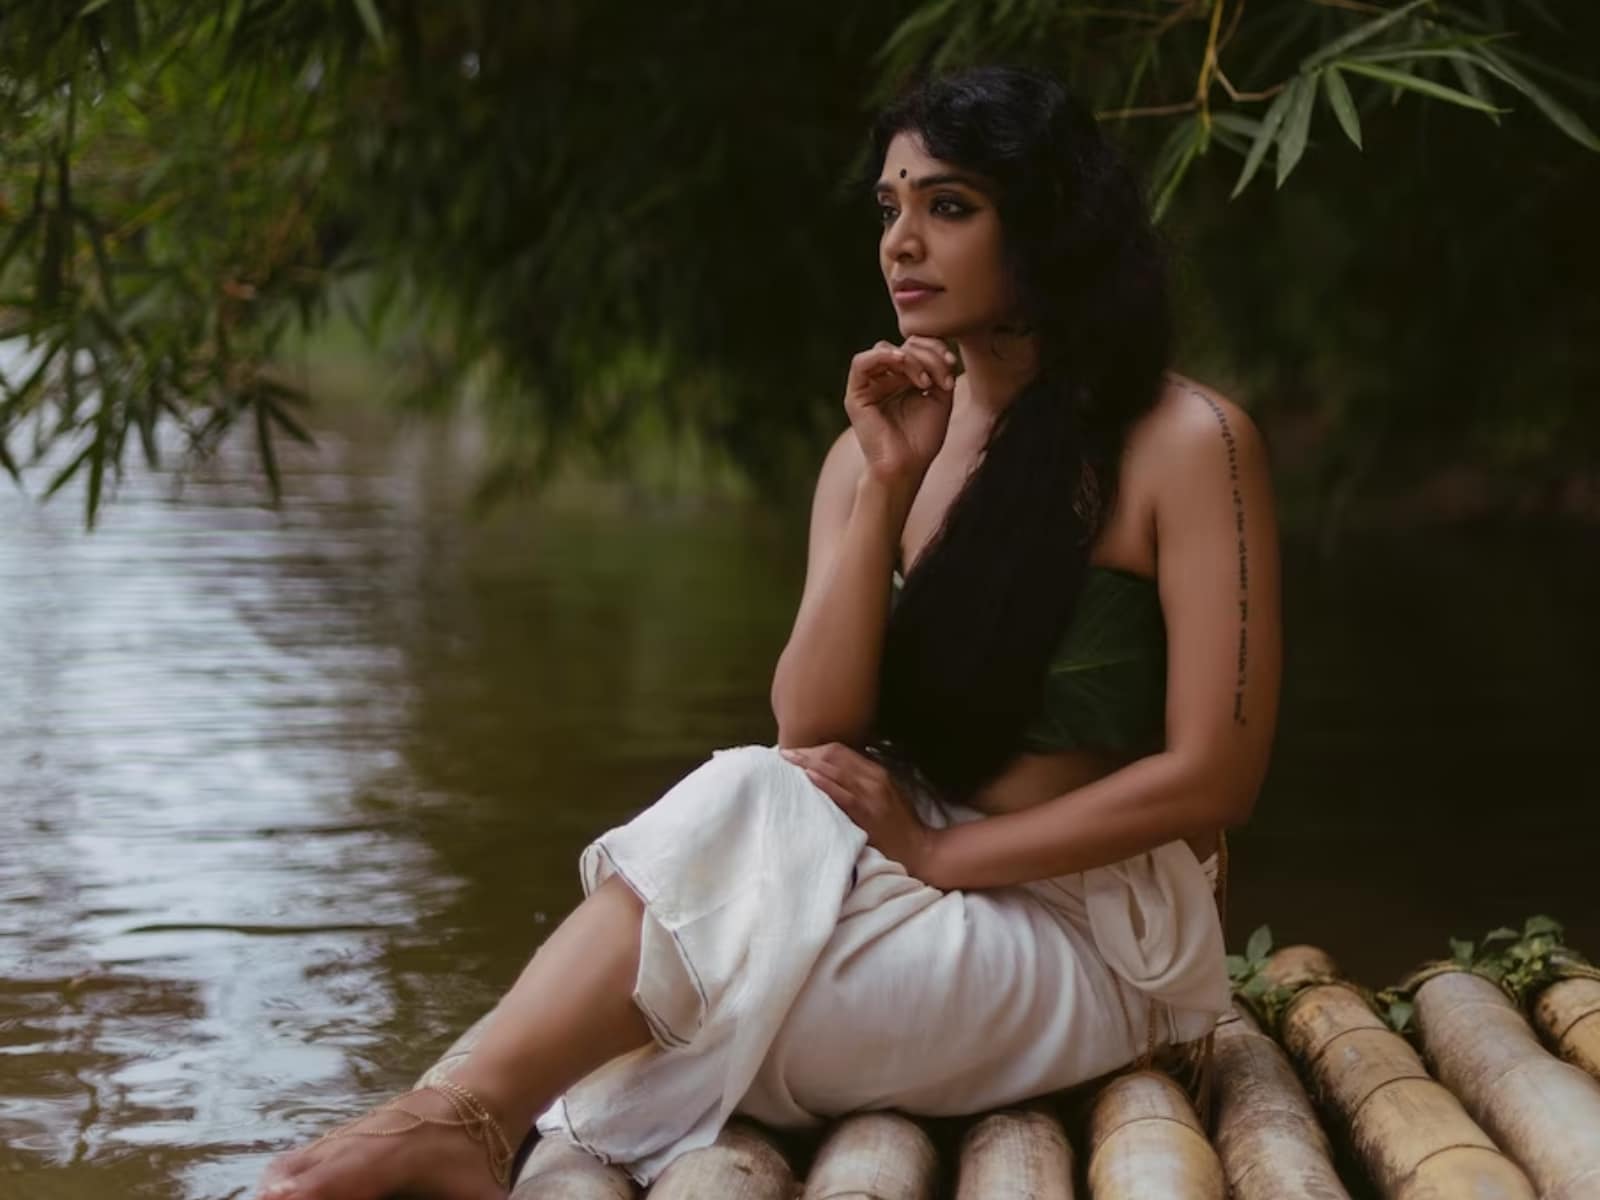 𝕀ℕ𝔻𝕀𝔸ℕℕ𝔾𝕀ℝ𝕃𝕊𝕊 on Instagram: “🖼️ Inframe : @zakia_sultana_sharna  📷 Photographer @joyeeta.trish… | Beauty full girl, Indian photoshoot,  Indian beauty saree